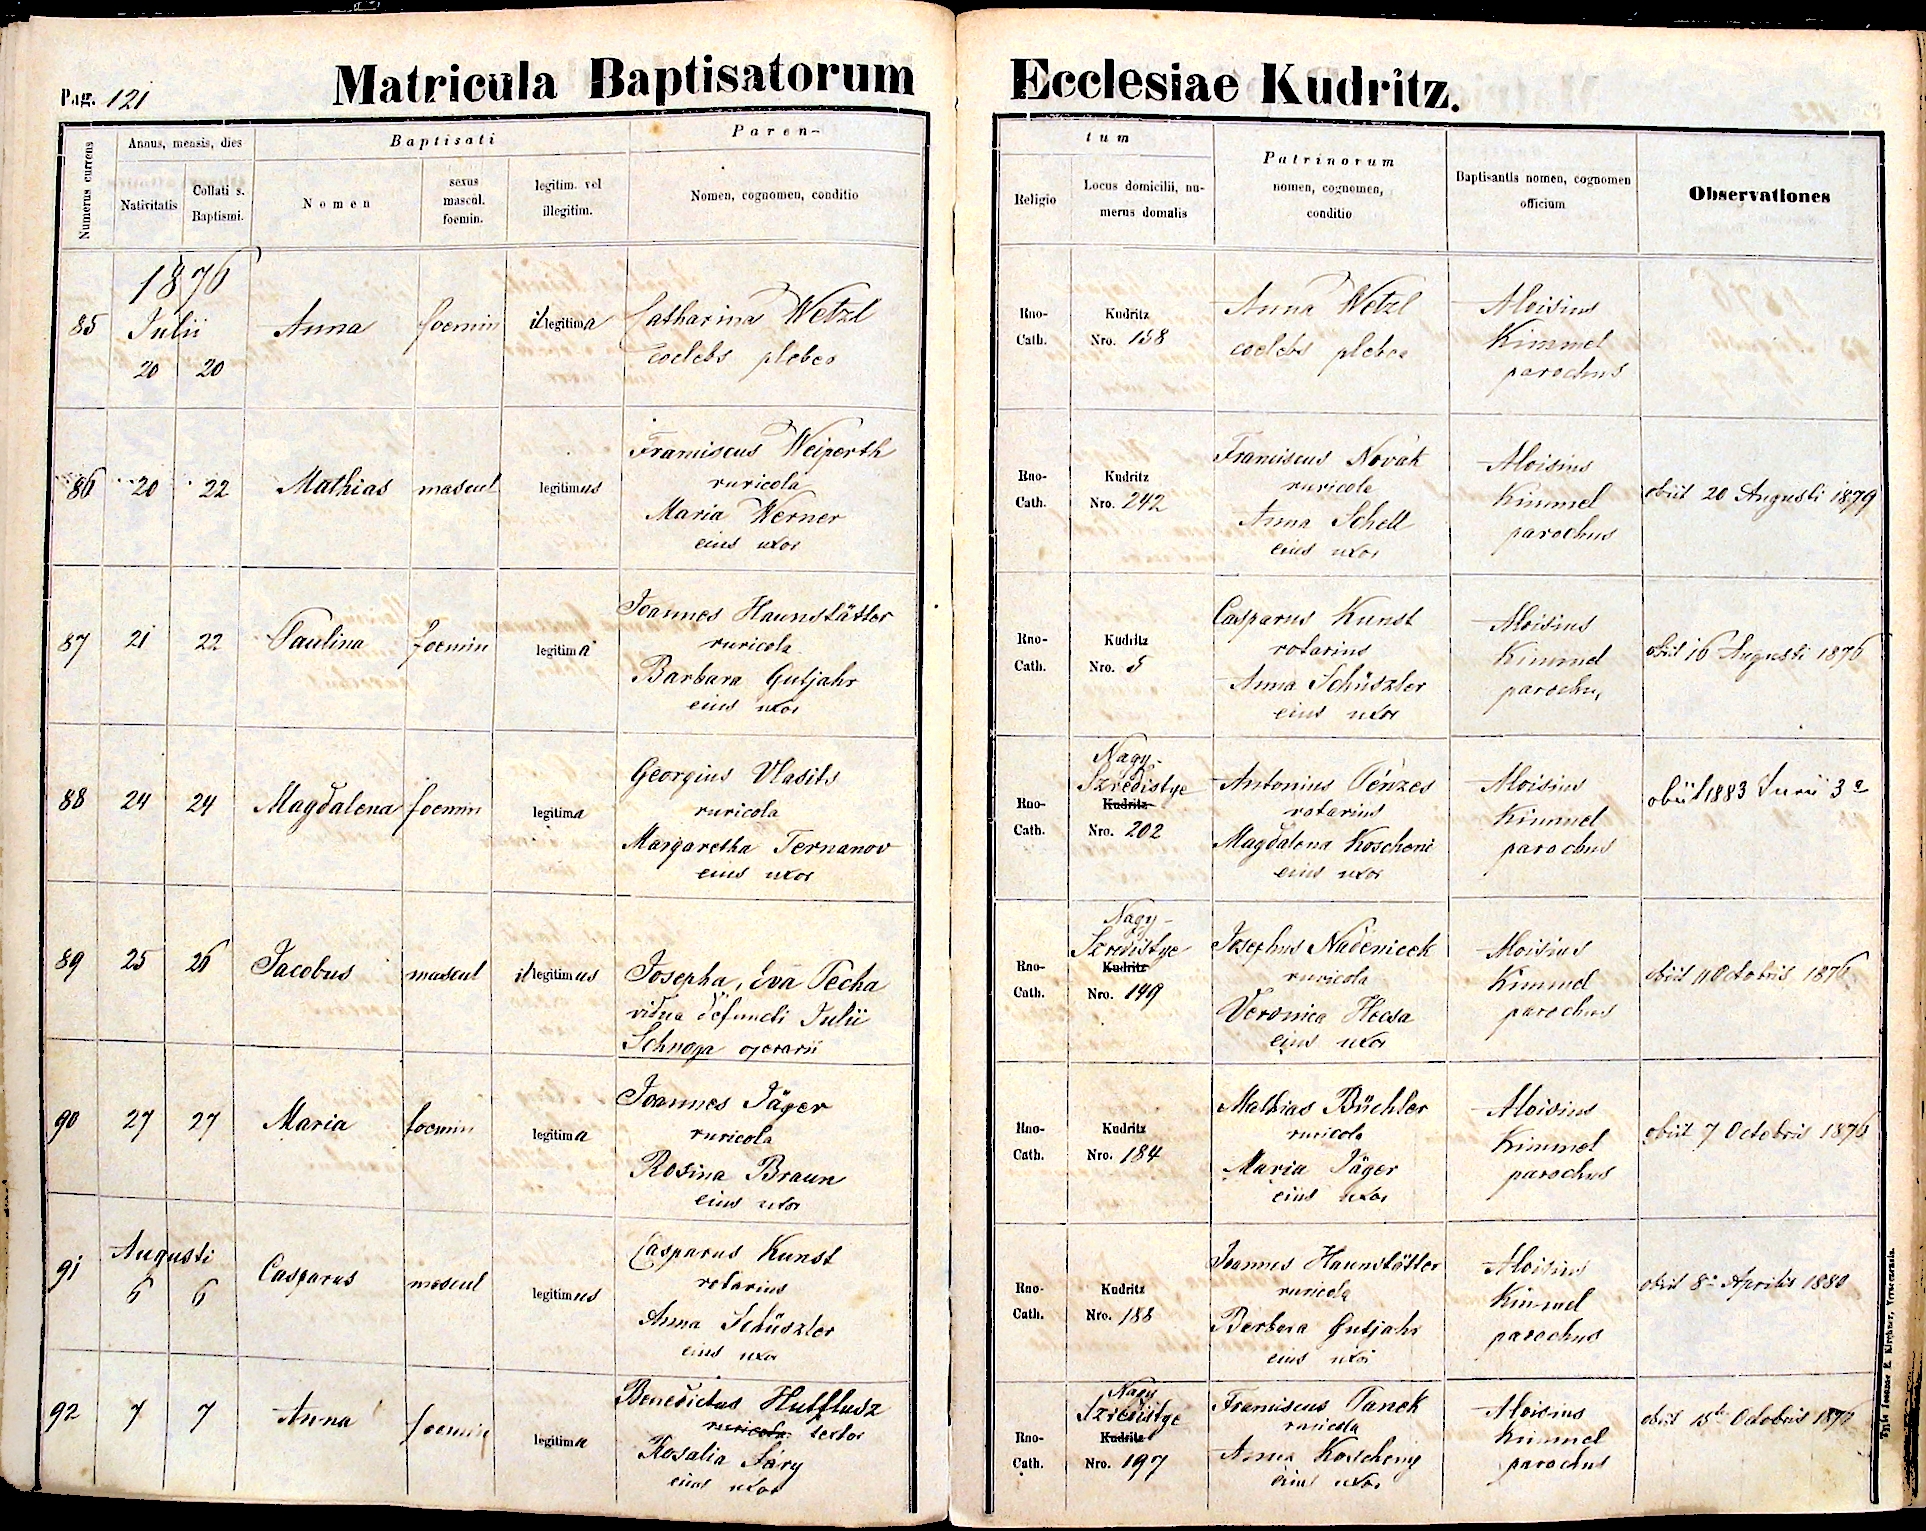 images/church_records/BIRTHS/1884-1899B/1892/121